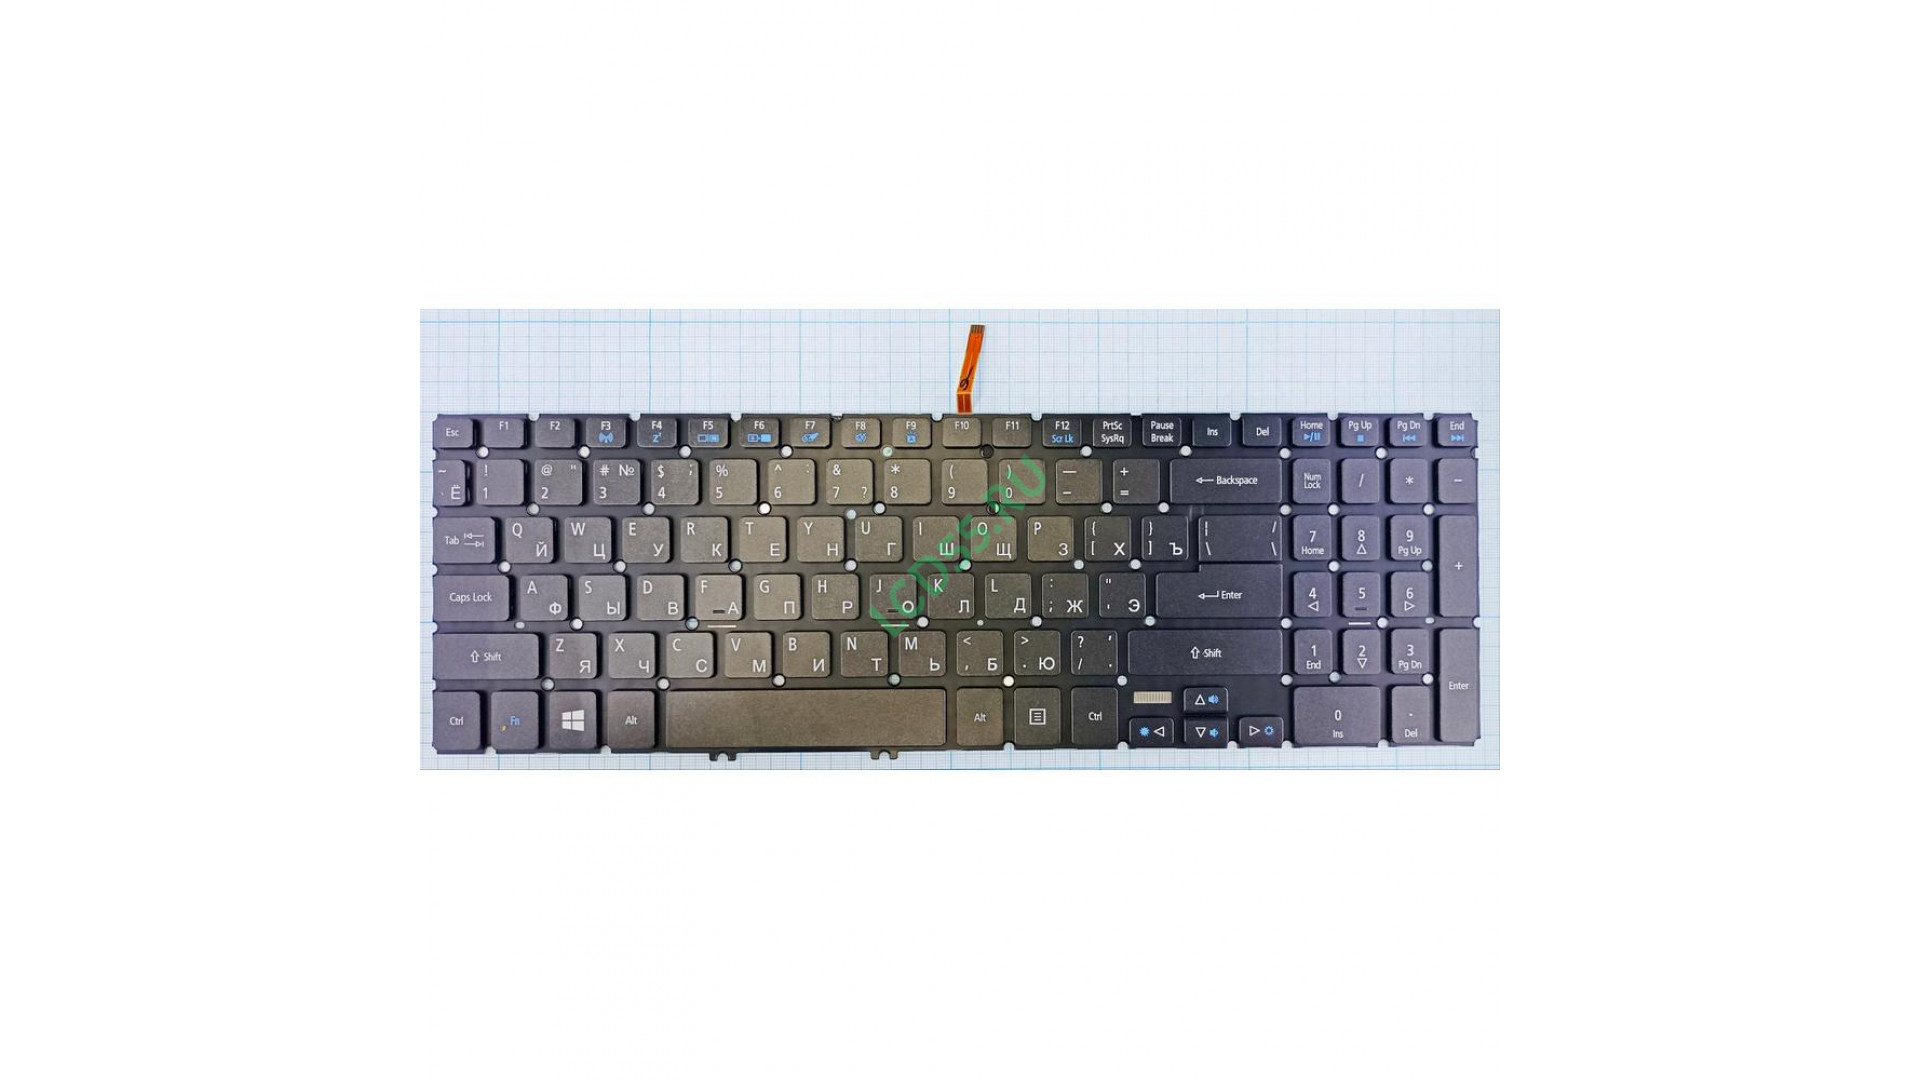 Клавиатура Acer Aspire V5-552 V5-552P V5-572 с подсветкой